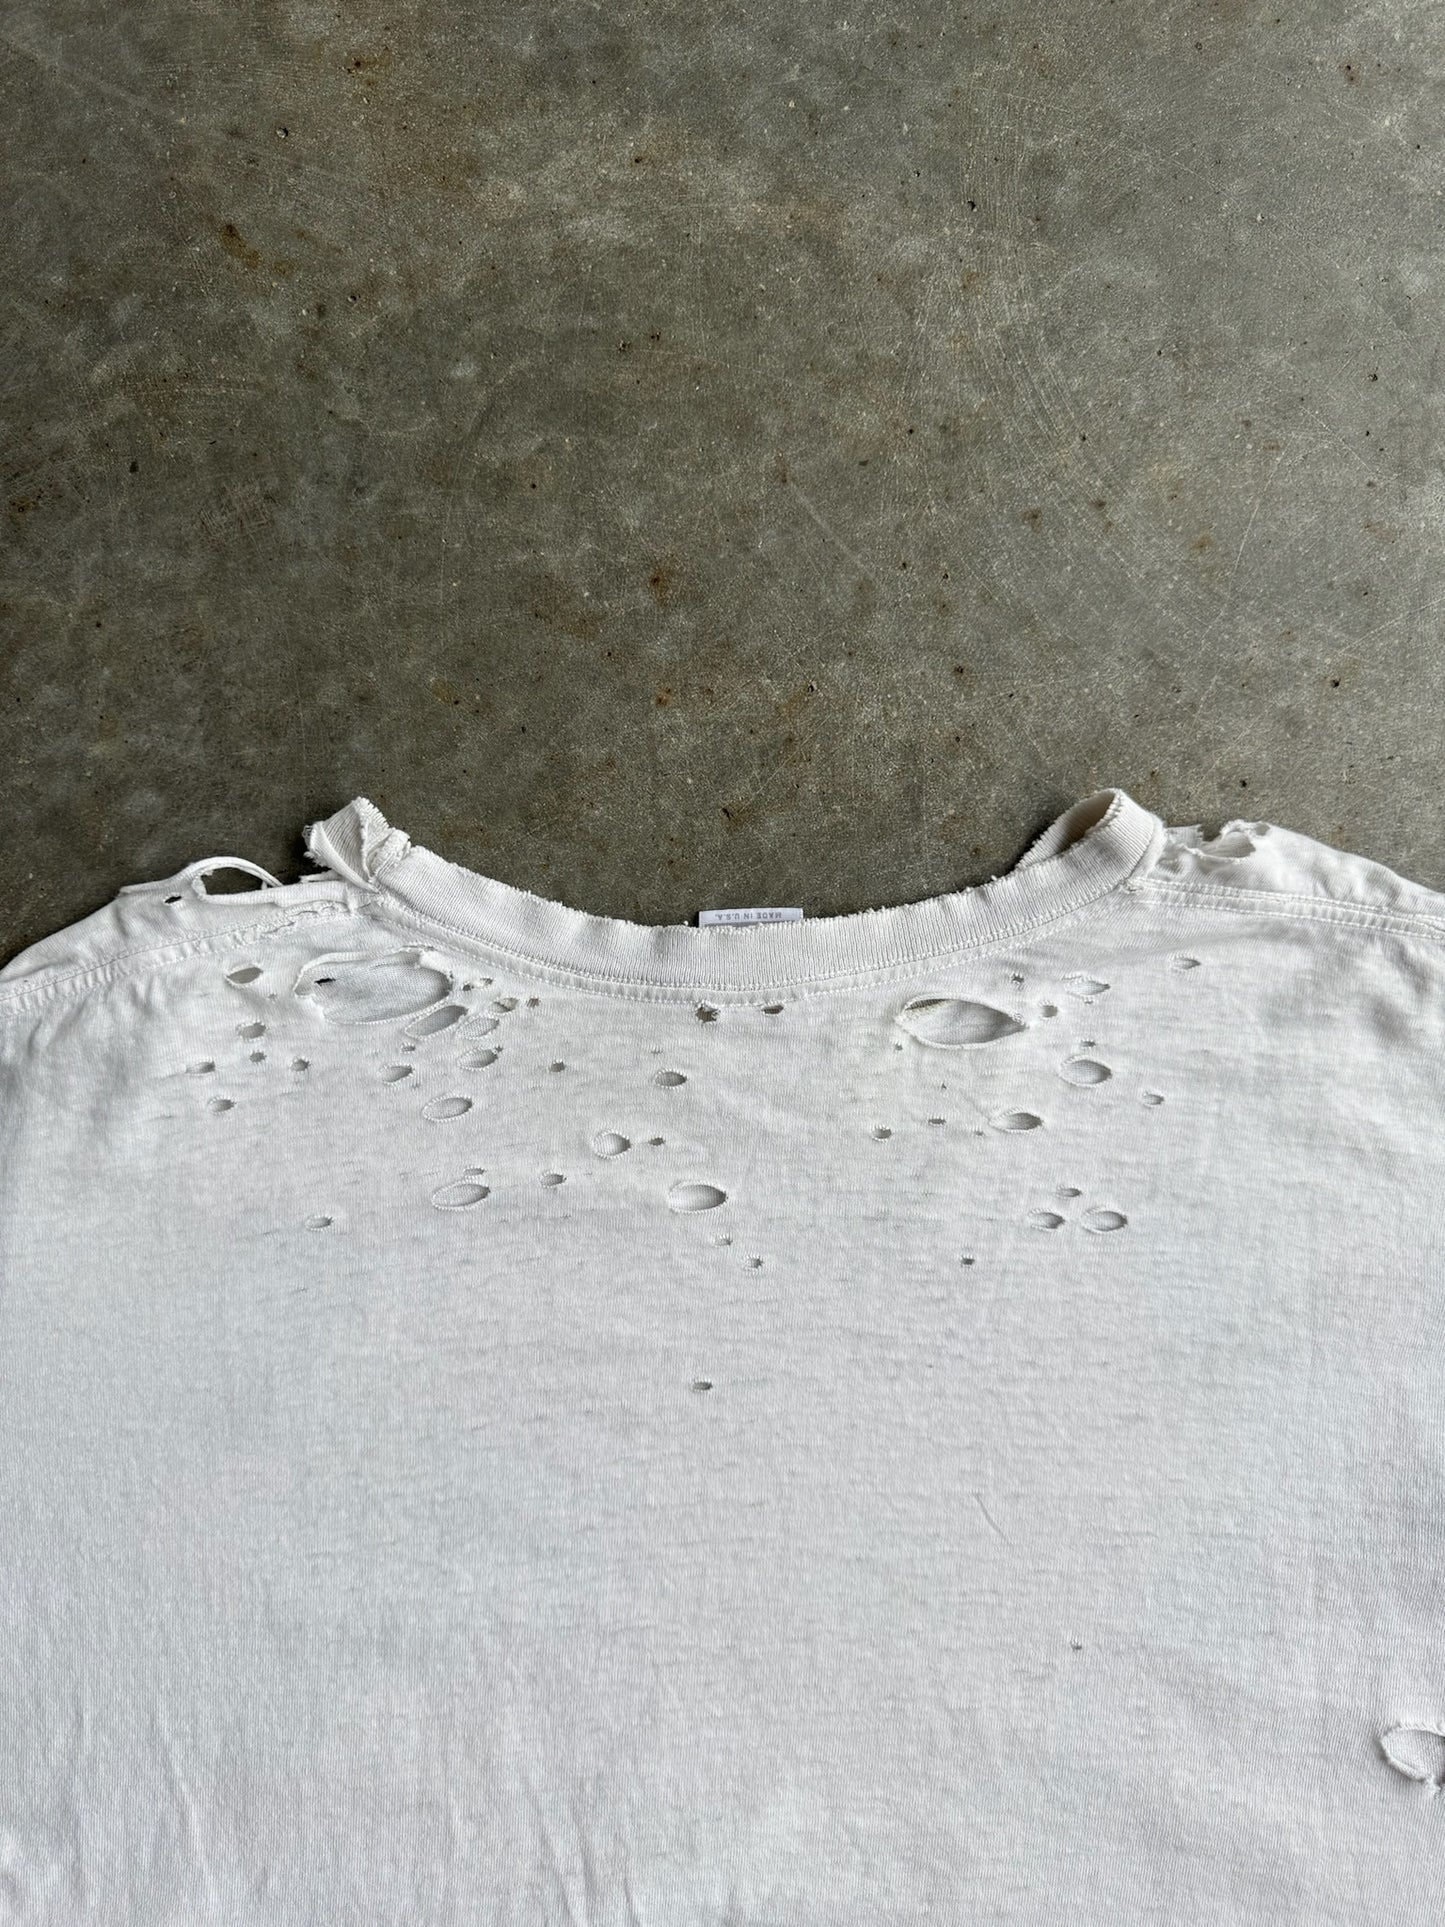 Vintage Distressed Nike Shirt - XL